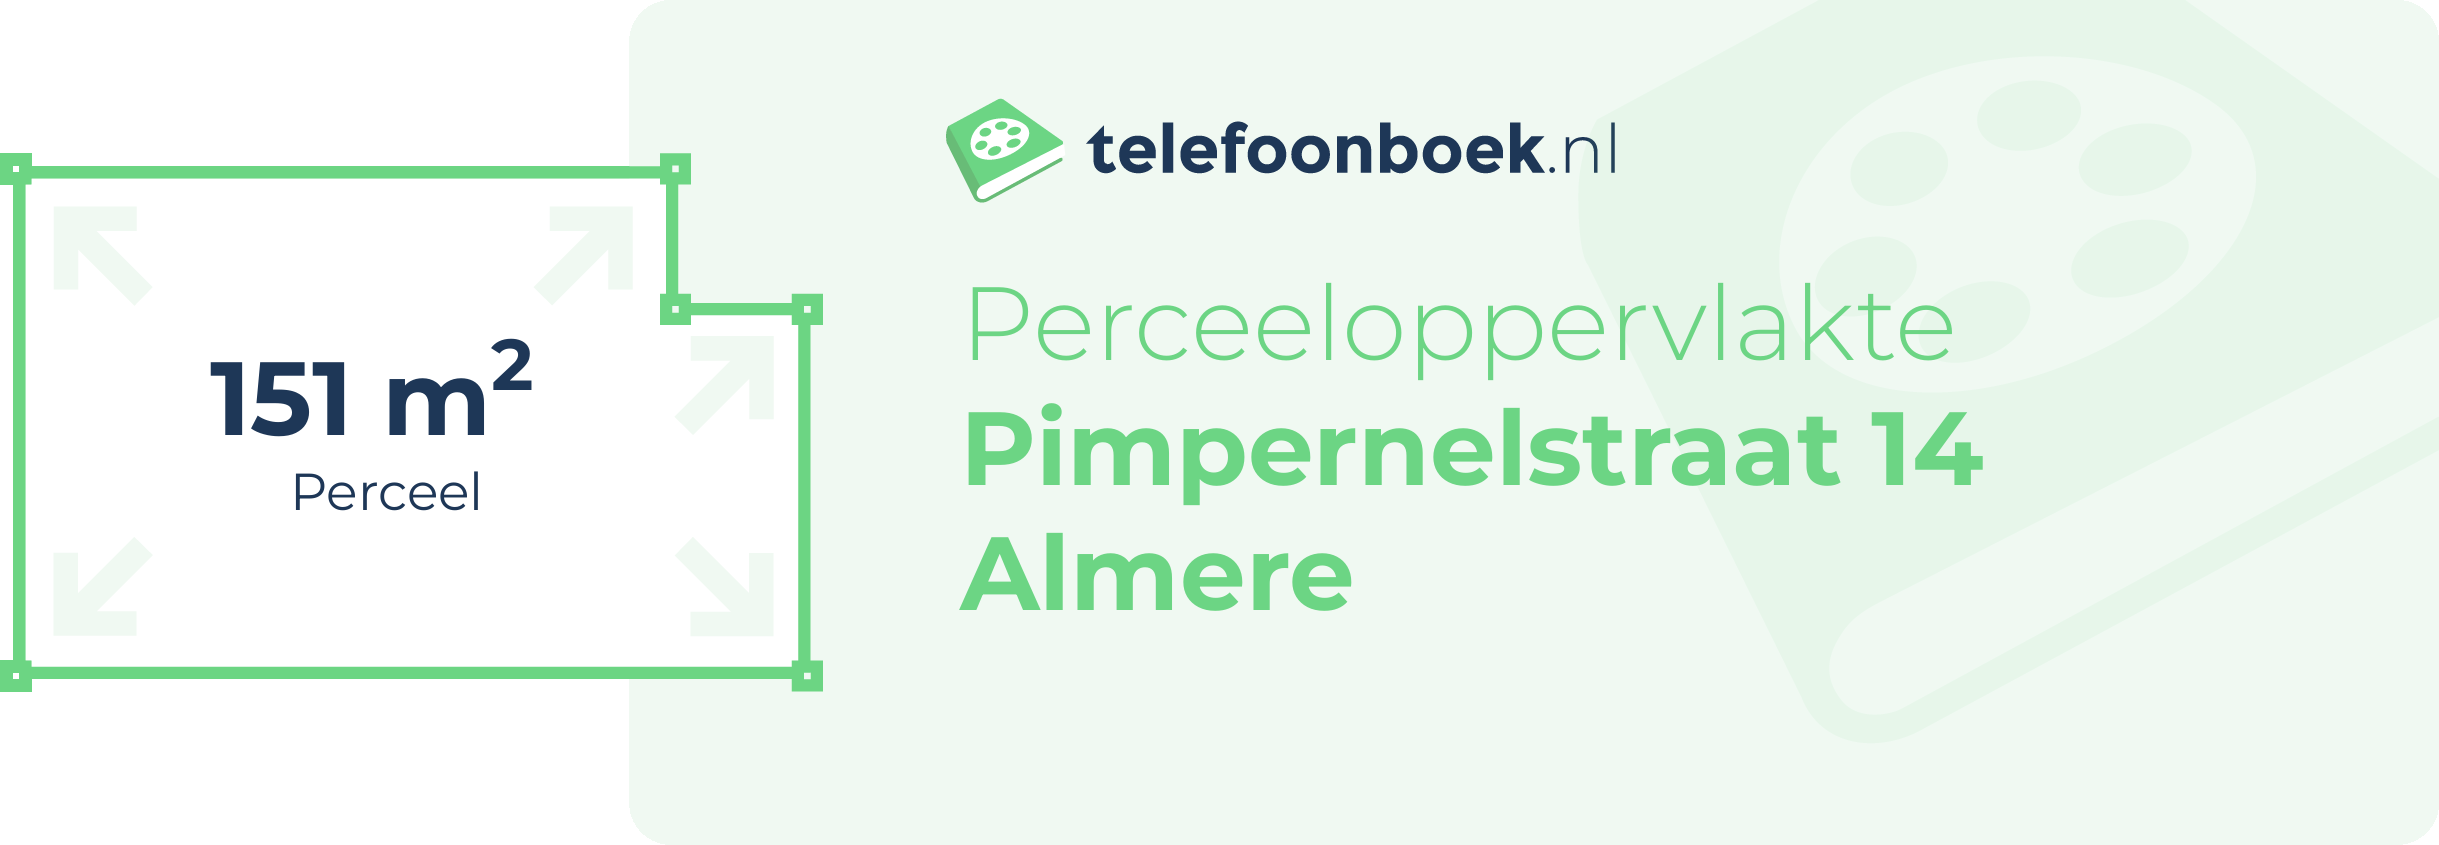 Perceeloppervlakte Pimpernelstraat 14 Almere